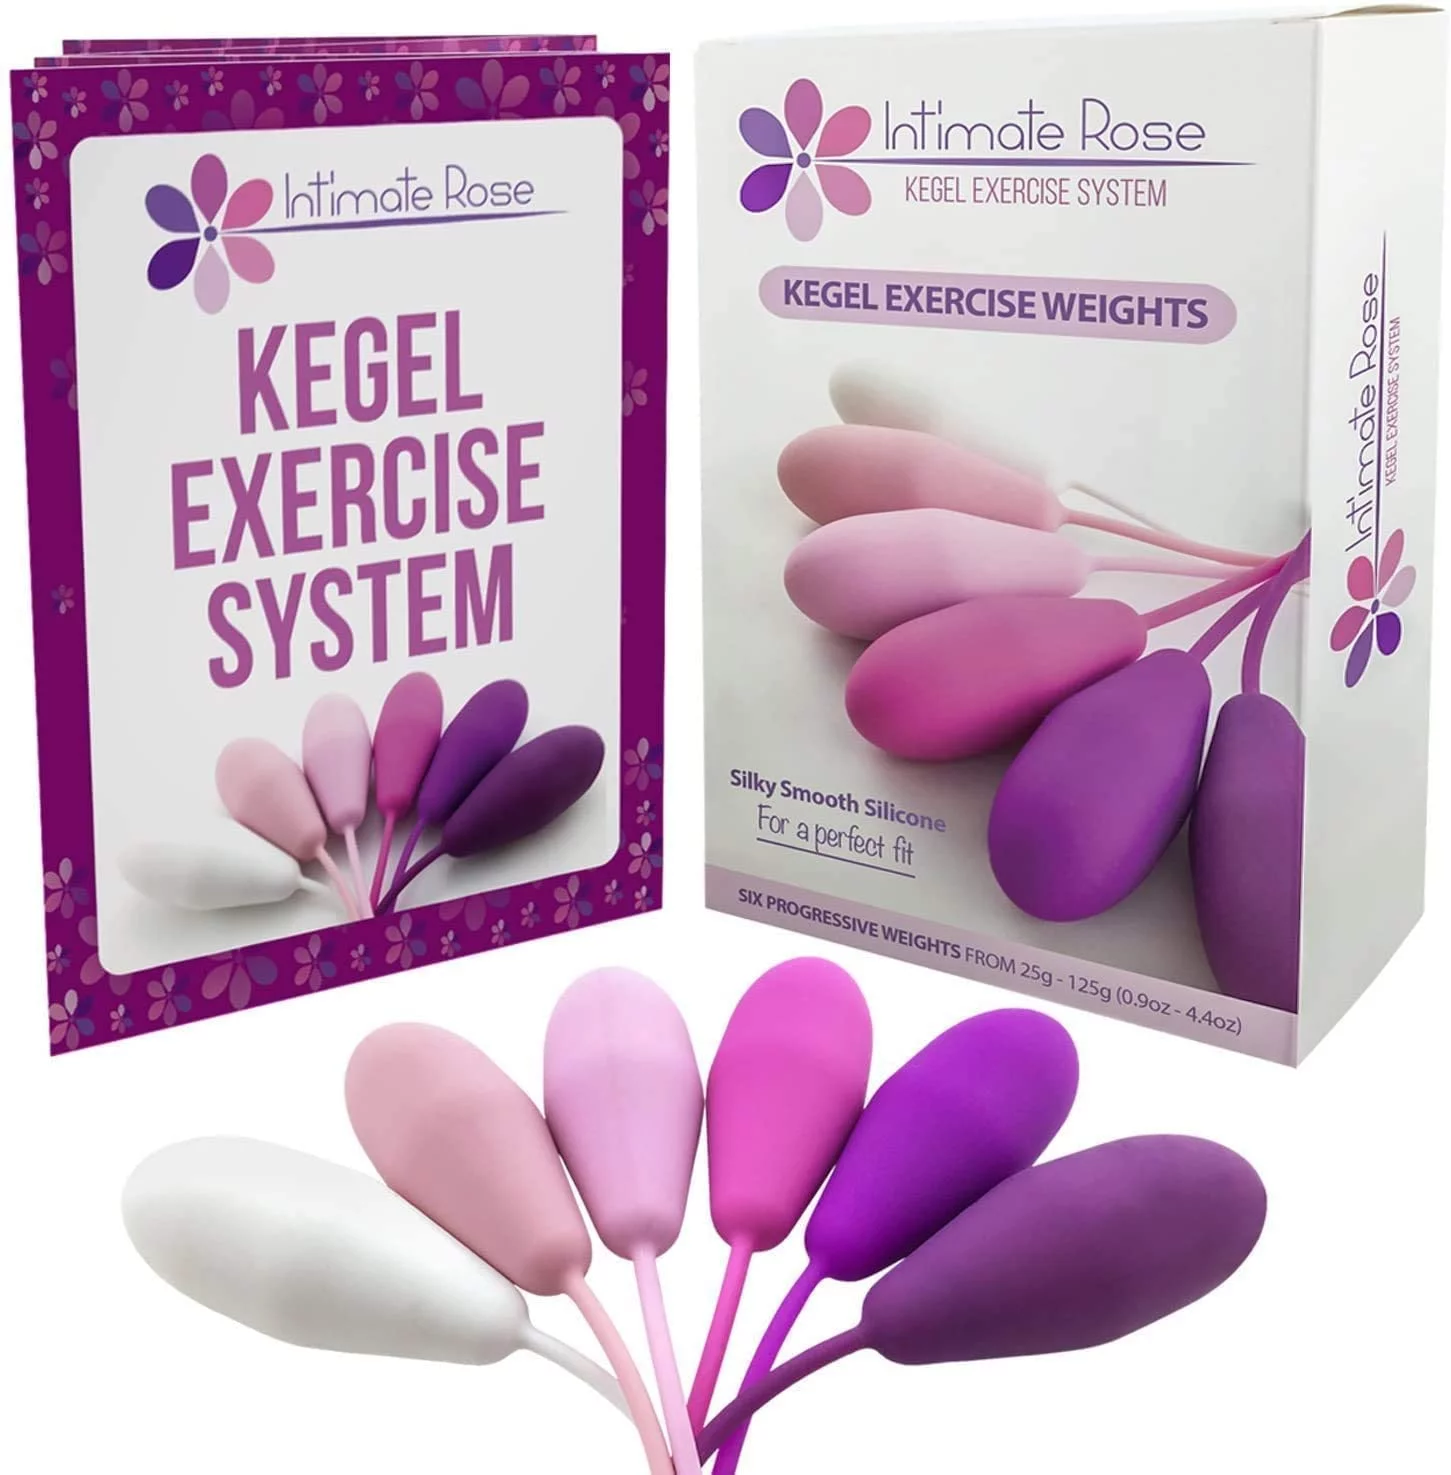 Intimate Rose Kegel Exercise System - Pelvic Floor Exercises - Set of 6